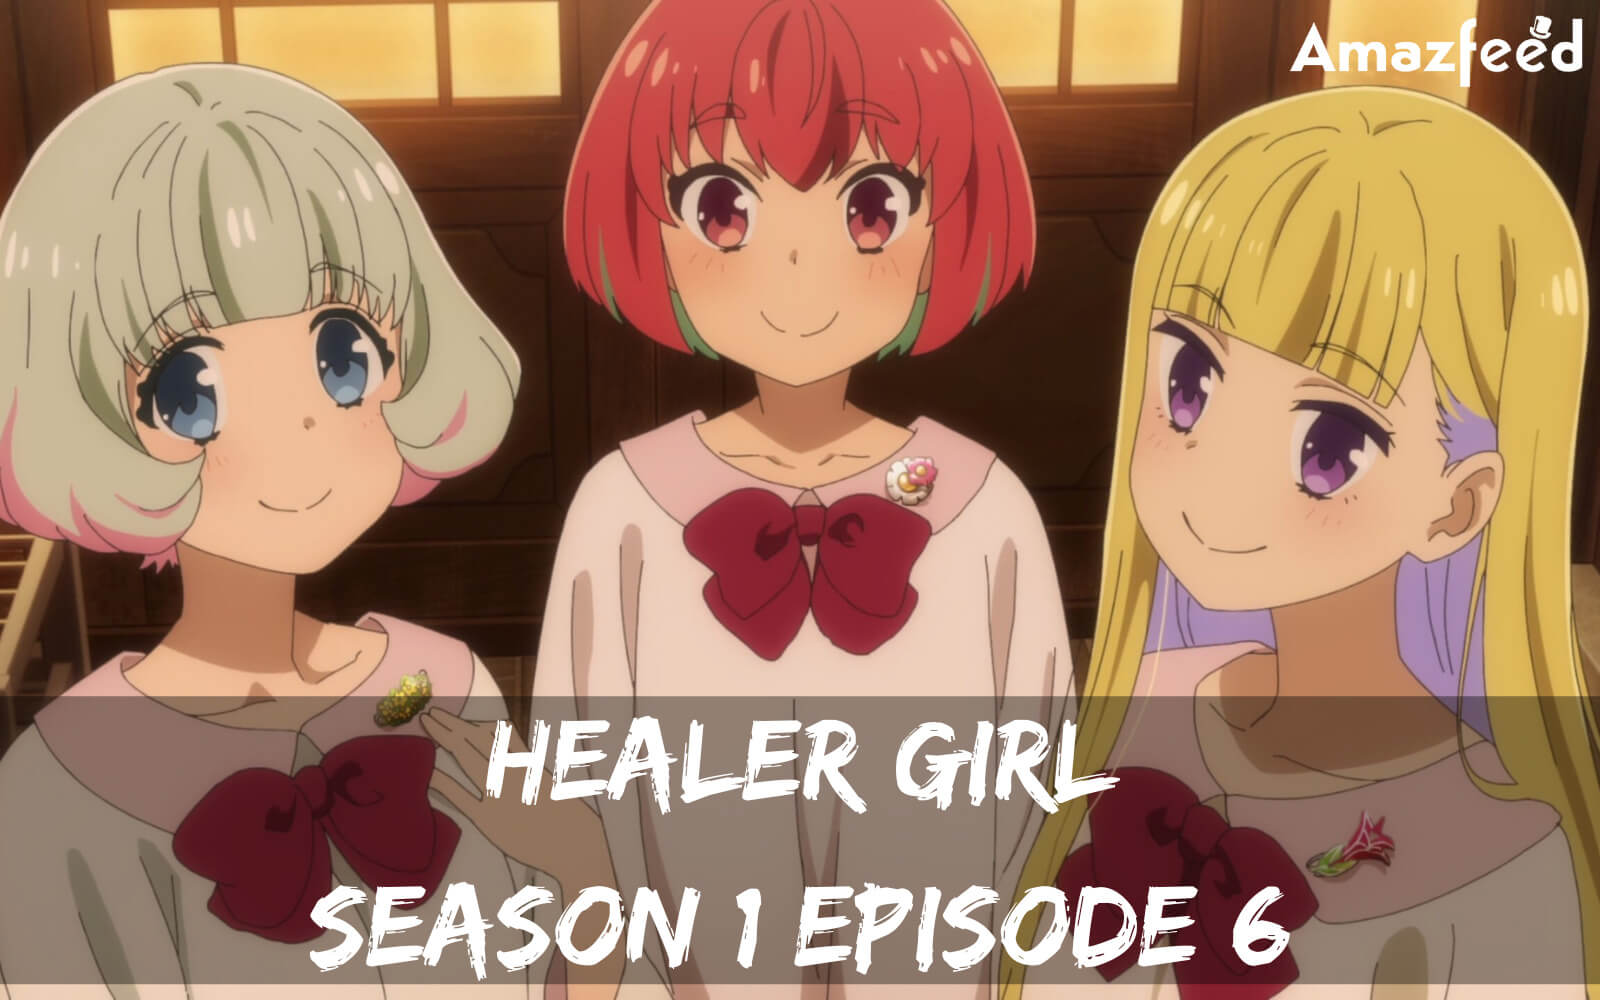 Healer Girl season 1 Episode 6 release date (1)